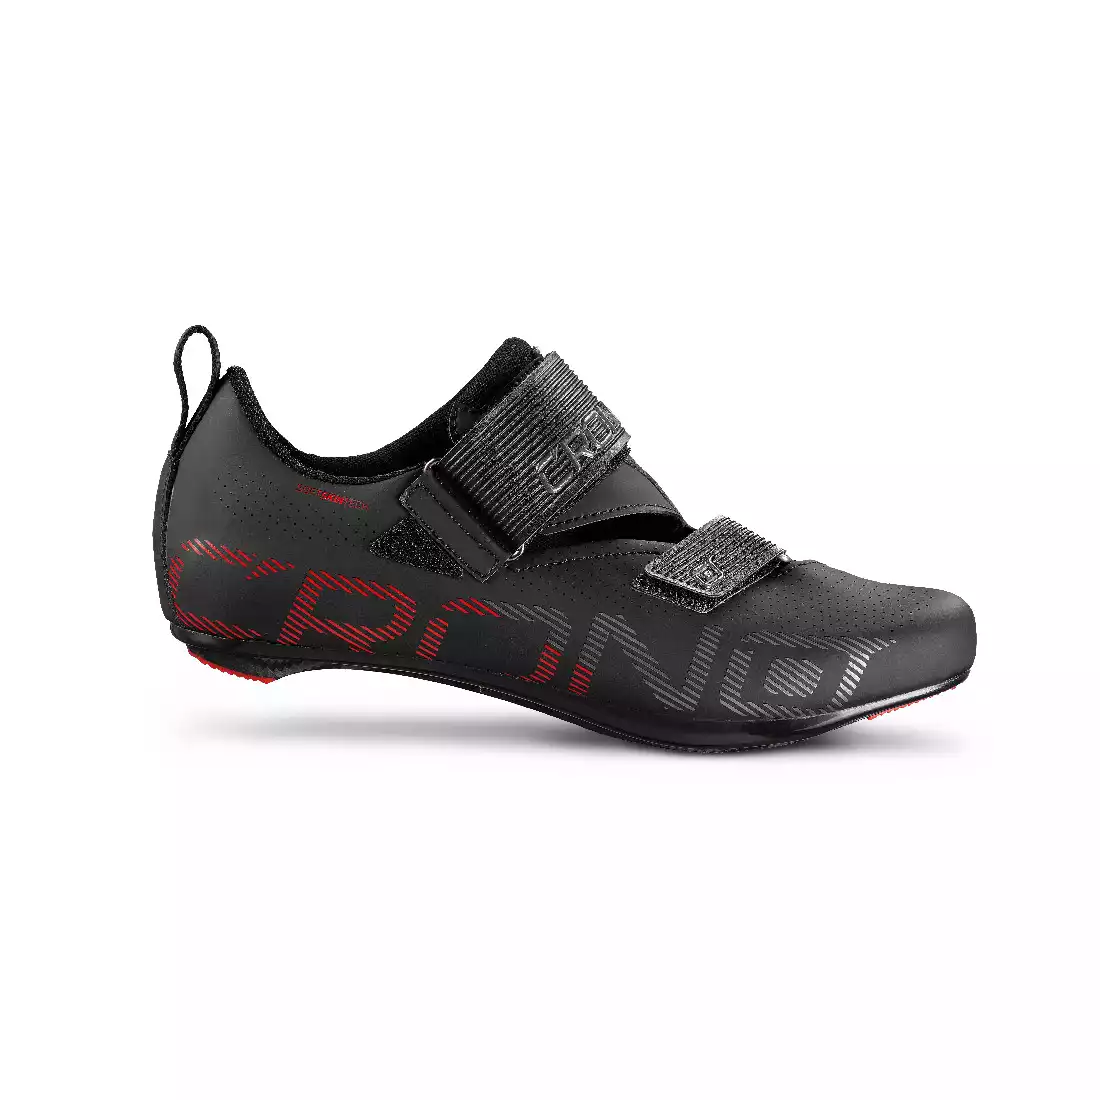 CRONO CT-1-20 Triatlonové cyklistické topánky, kompozitné, čierne